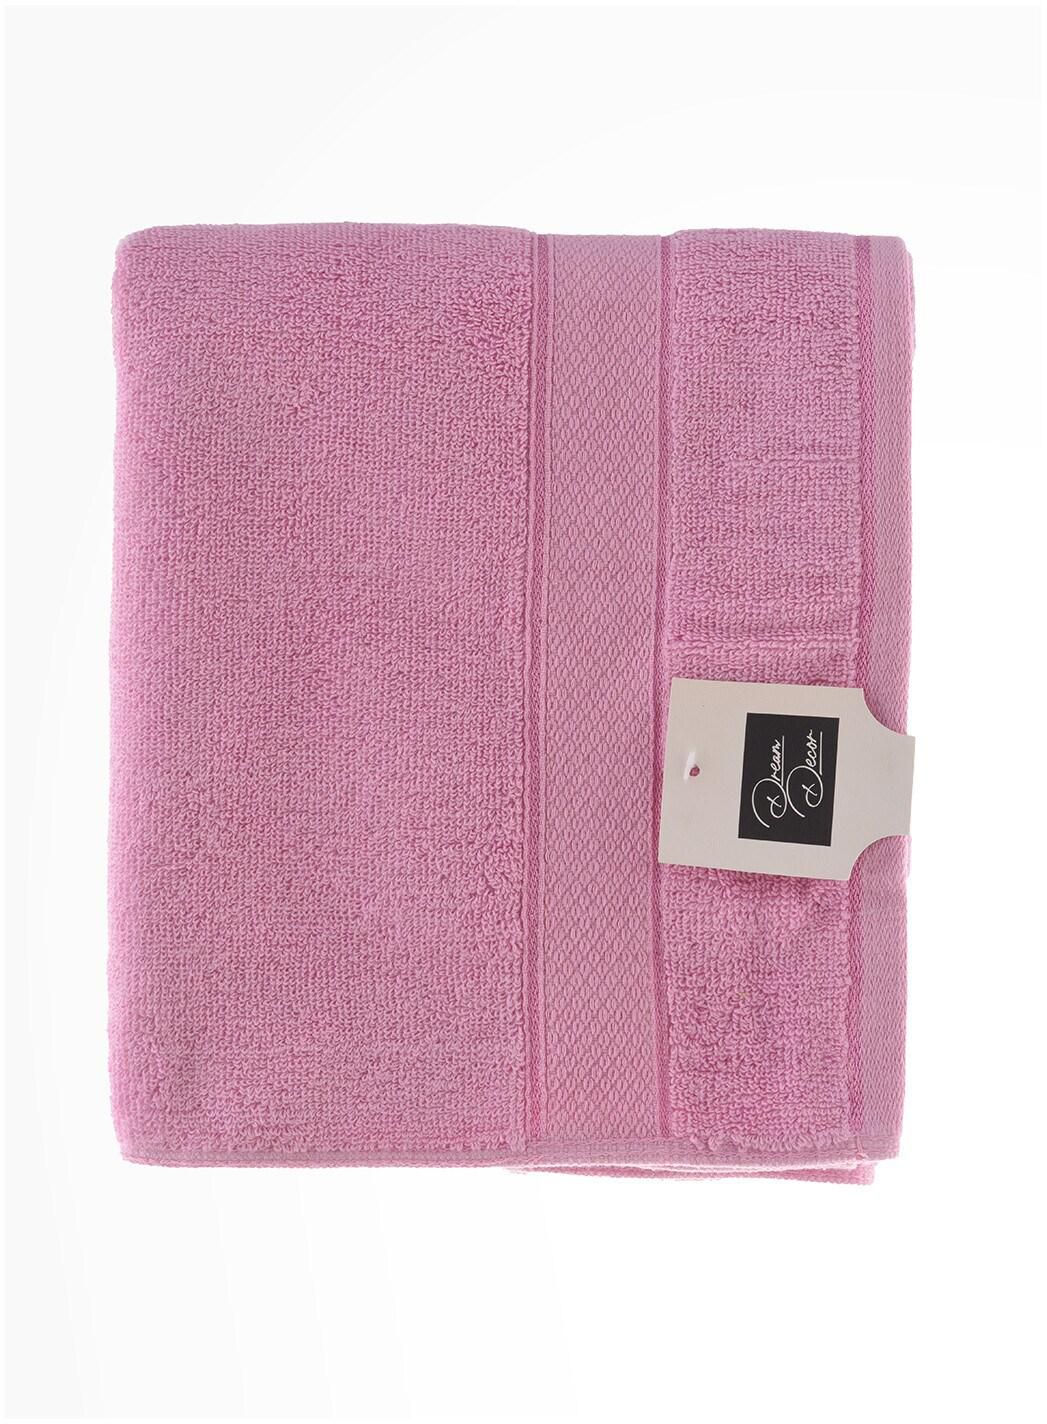 Pink 100% Cotton Hand Towel Set of 2  50x90 cm